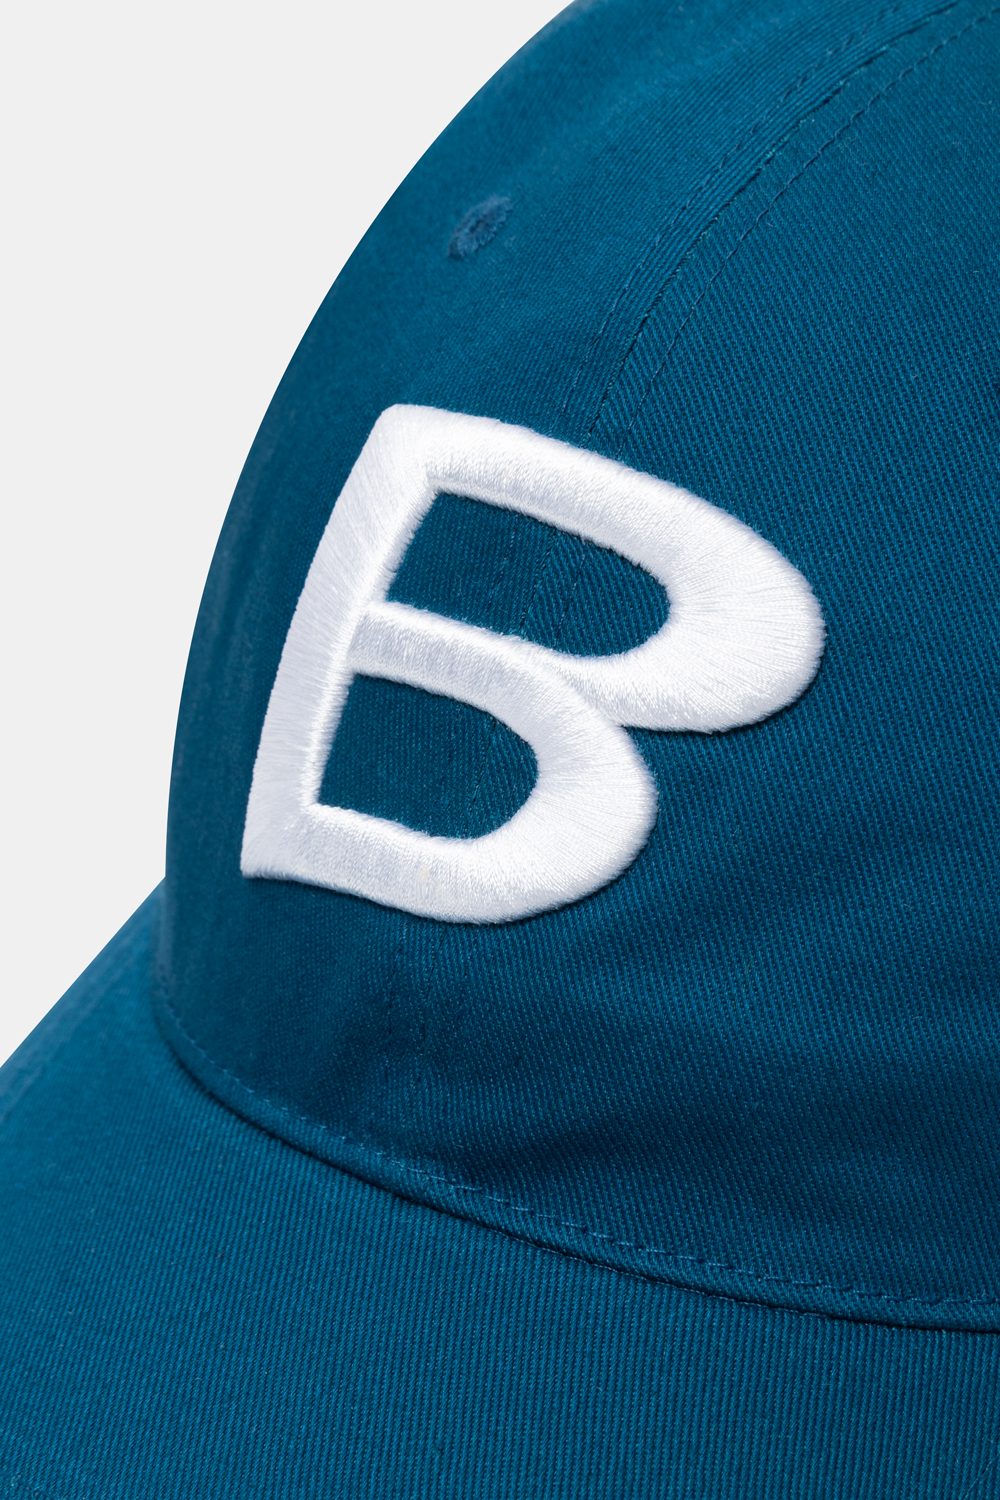 B LOGO BALL CAP